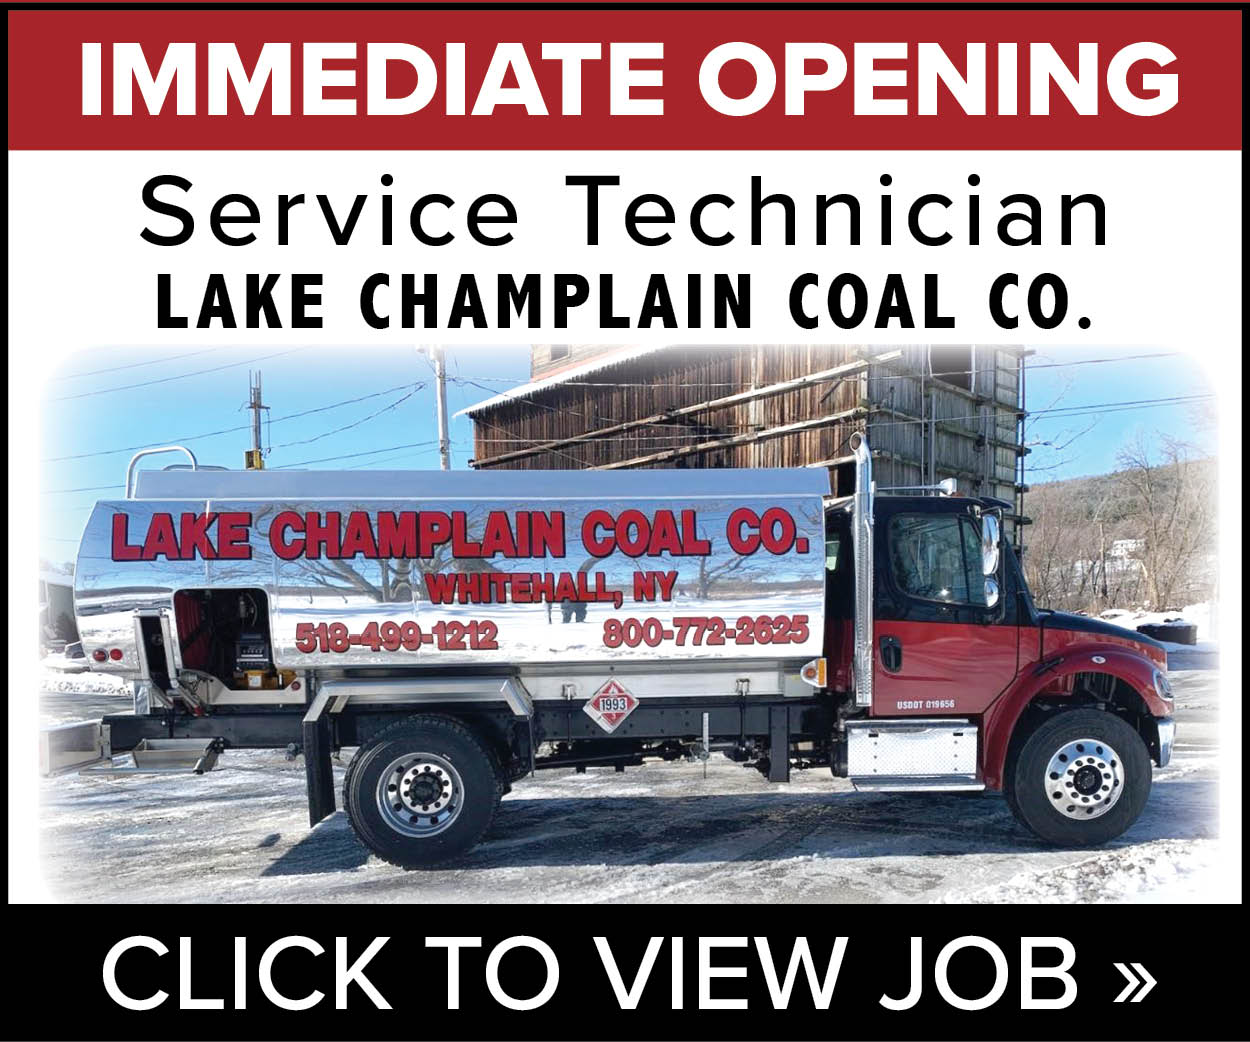 Service Tech wanted at Lake Champlain Coal Co